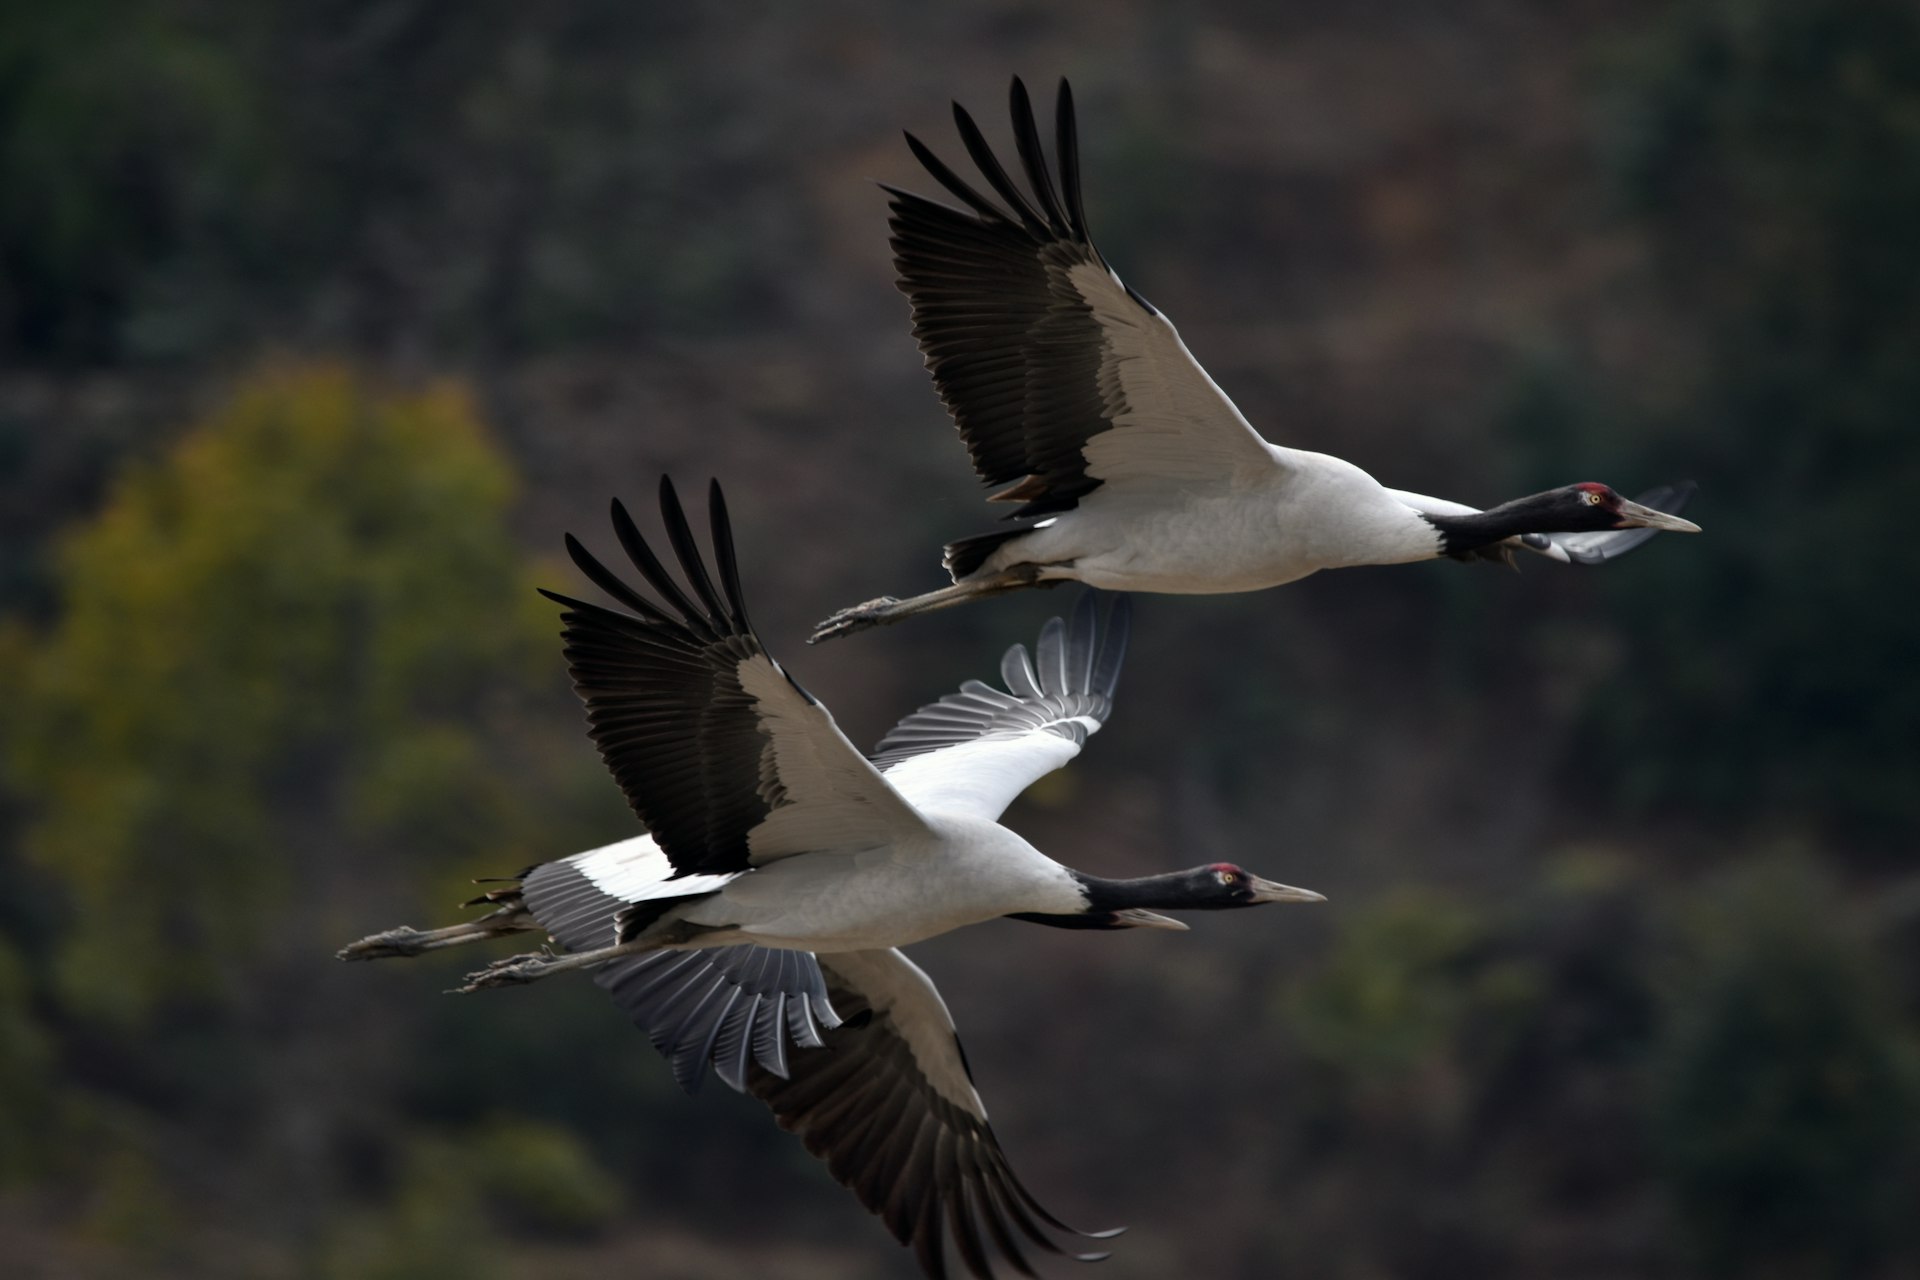 Black-necked cranes at Trahiyangtse, eastern Bhutan